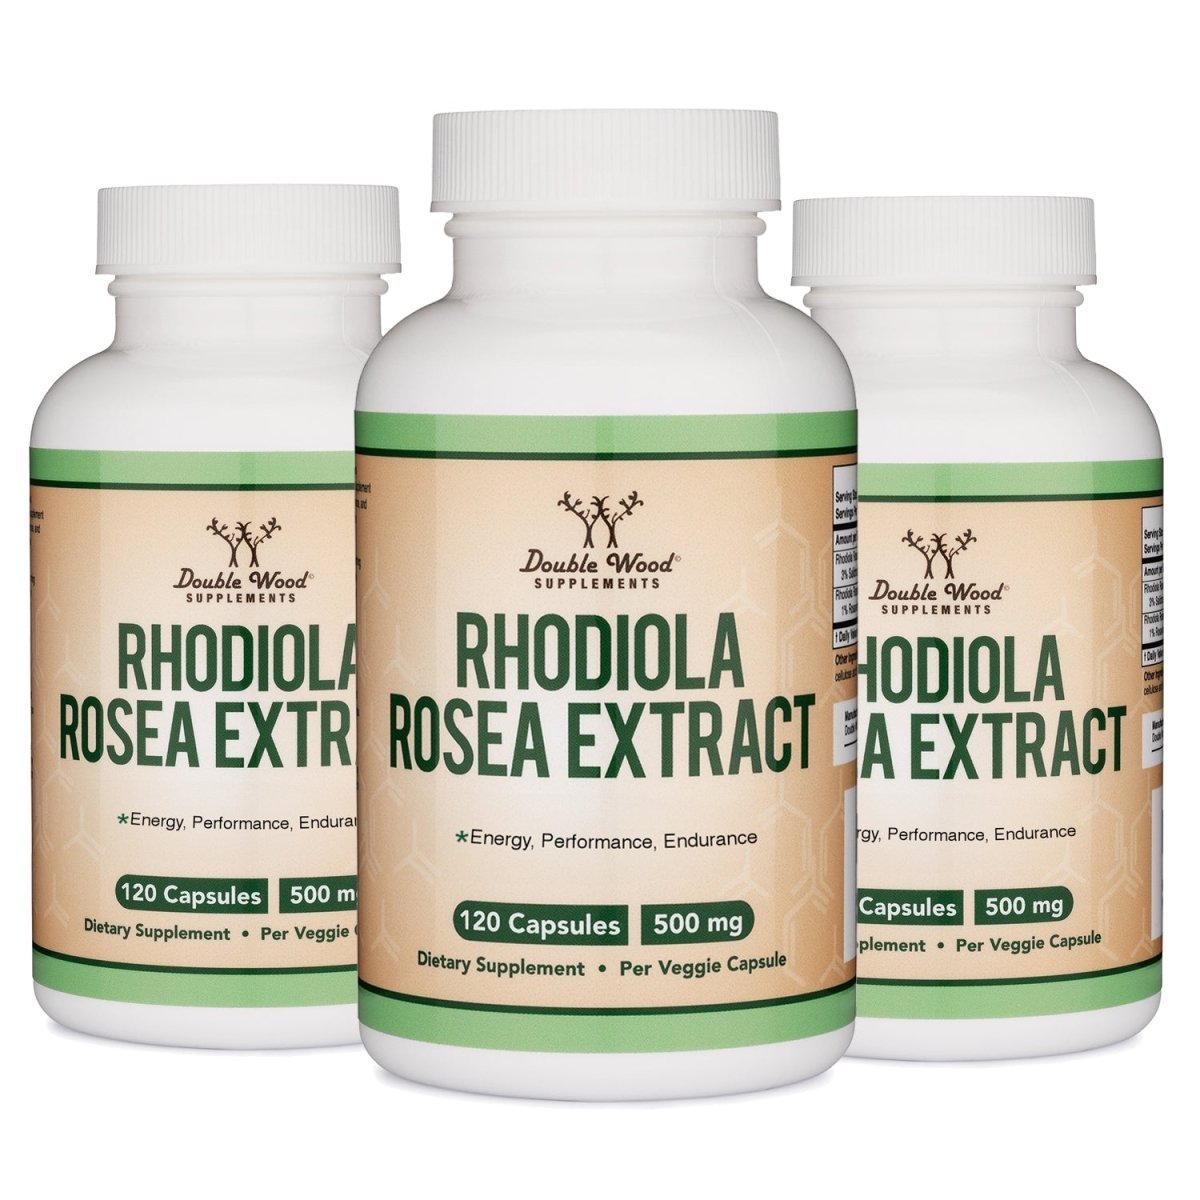 Rhodiola Rosea Extract Supplement